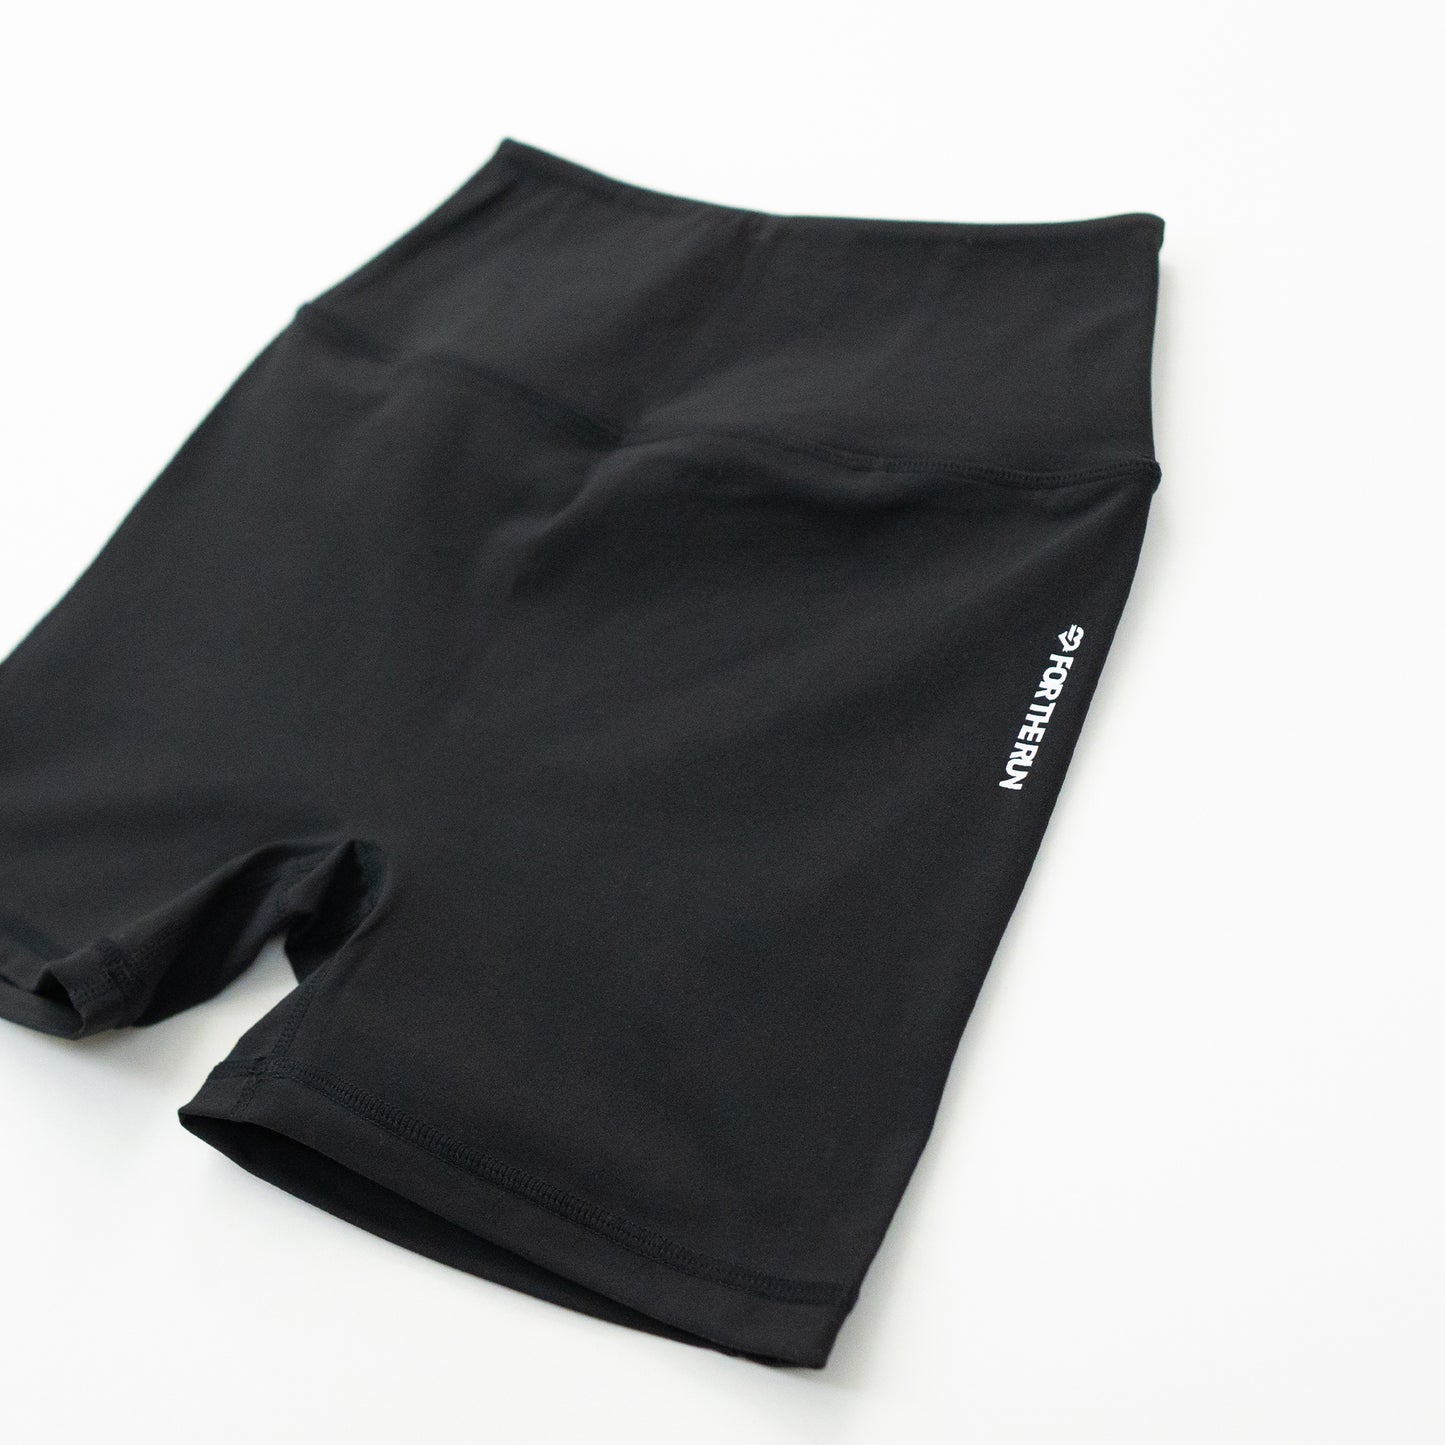 Dasher 3" Compression Shorts, Women's - Black